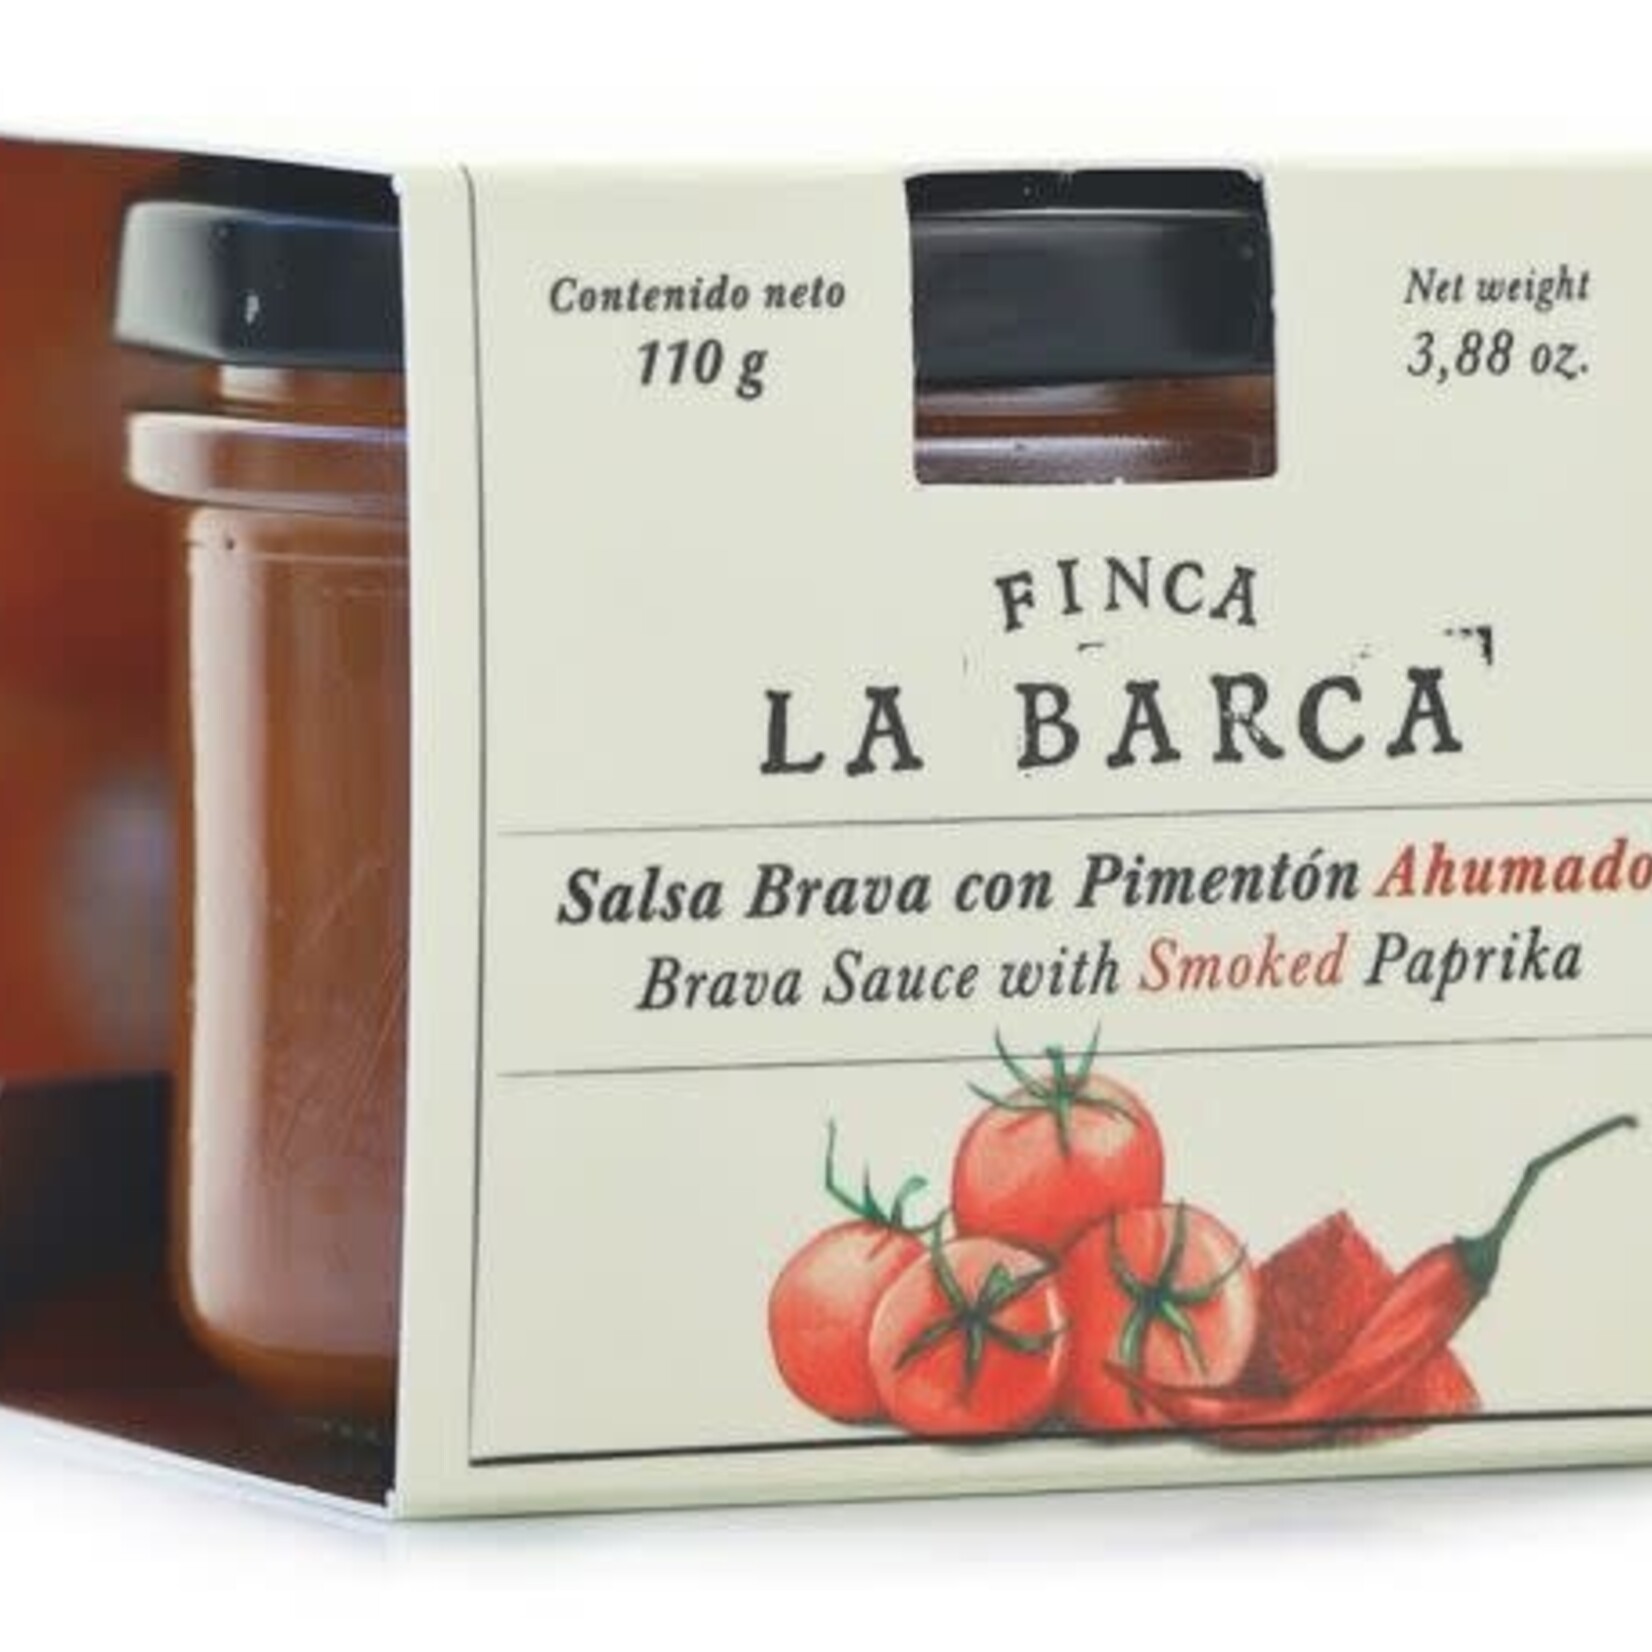 finca la barca Brava Sauce with Smoked Paprika "Finca La Barca" 110G